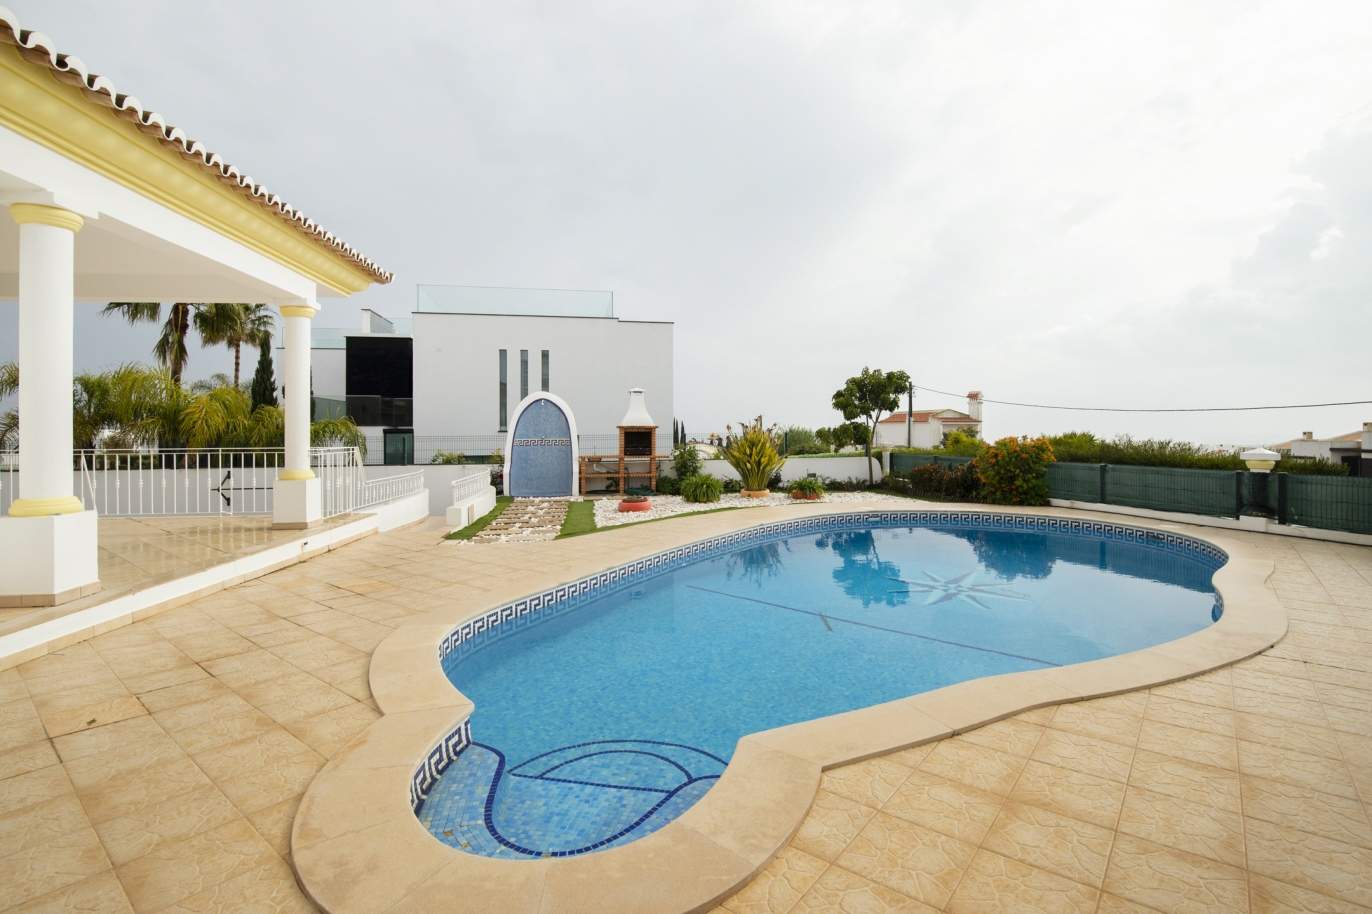 4 Bedroom Villa with swimming pool, for sale, in Albufeira, Algarve_196125